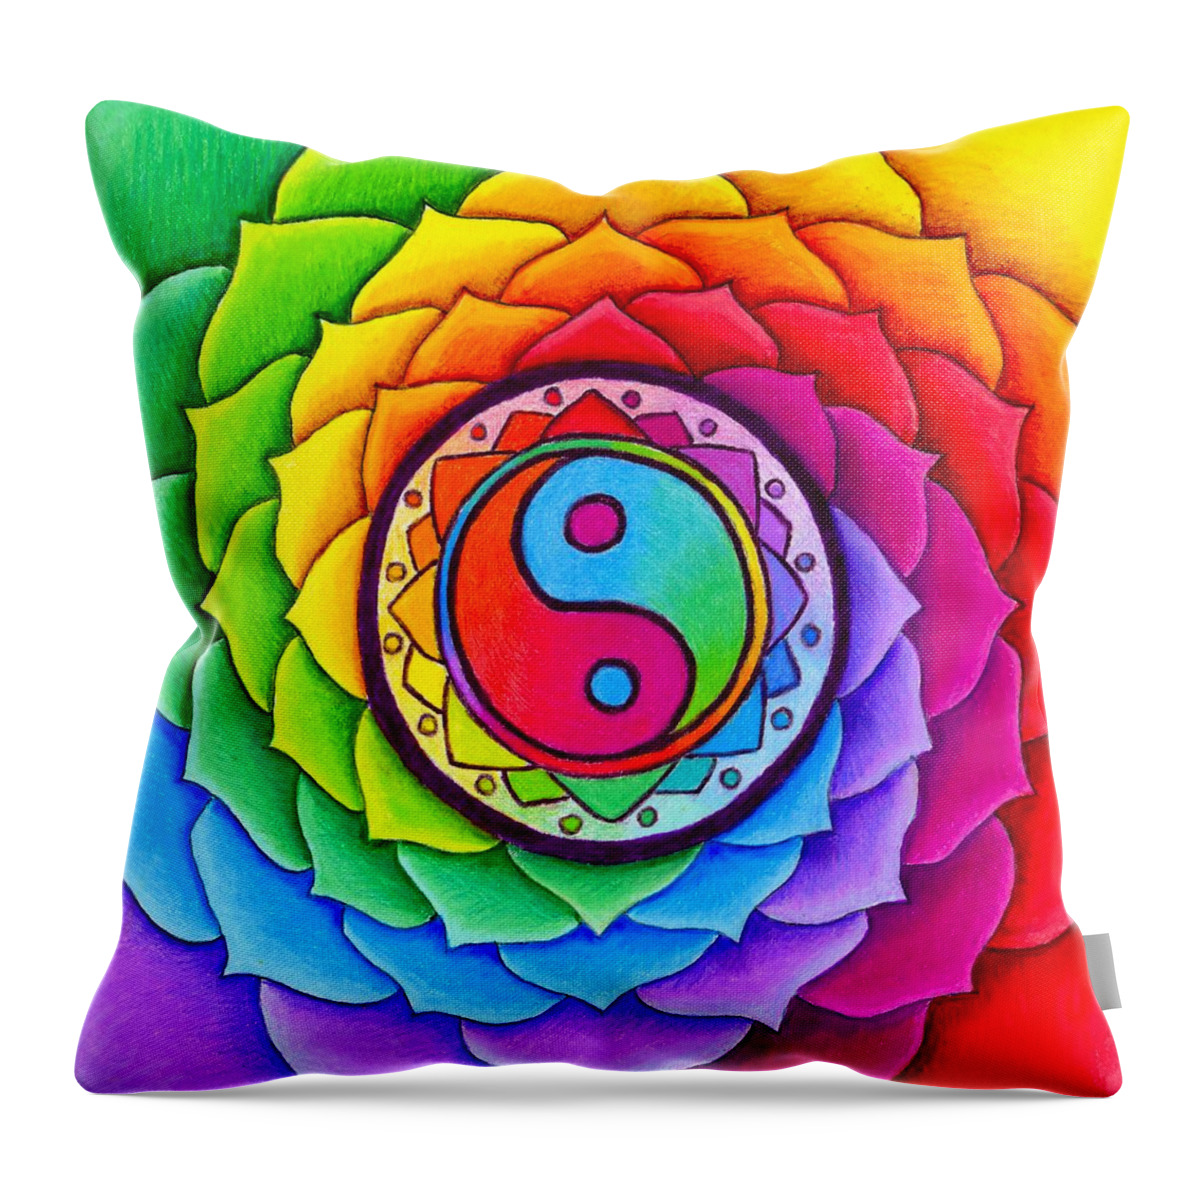 Mandala Throw Pillow featuring the drawing Healing Lotus by Rebecca Wang